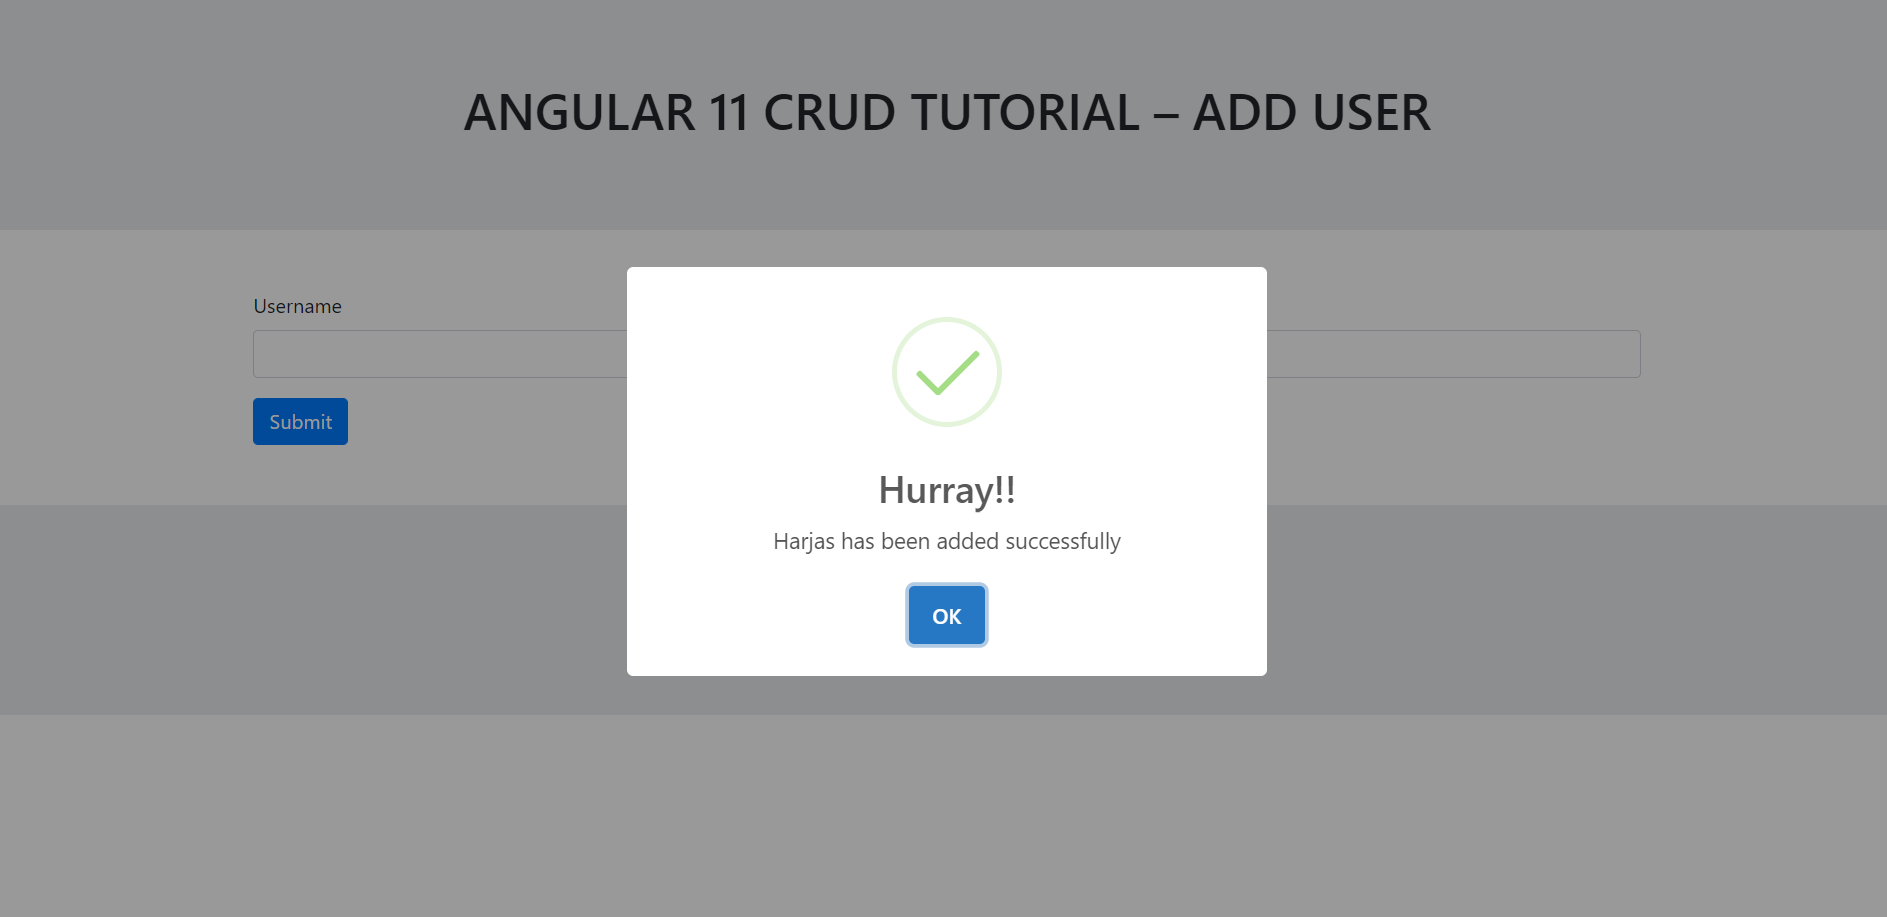 Angular 11 Crud Tutorial - Add User